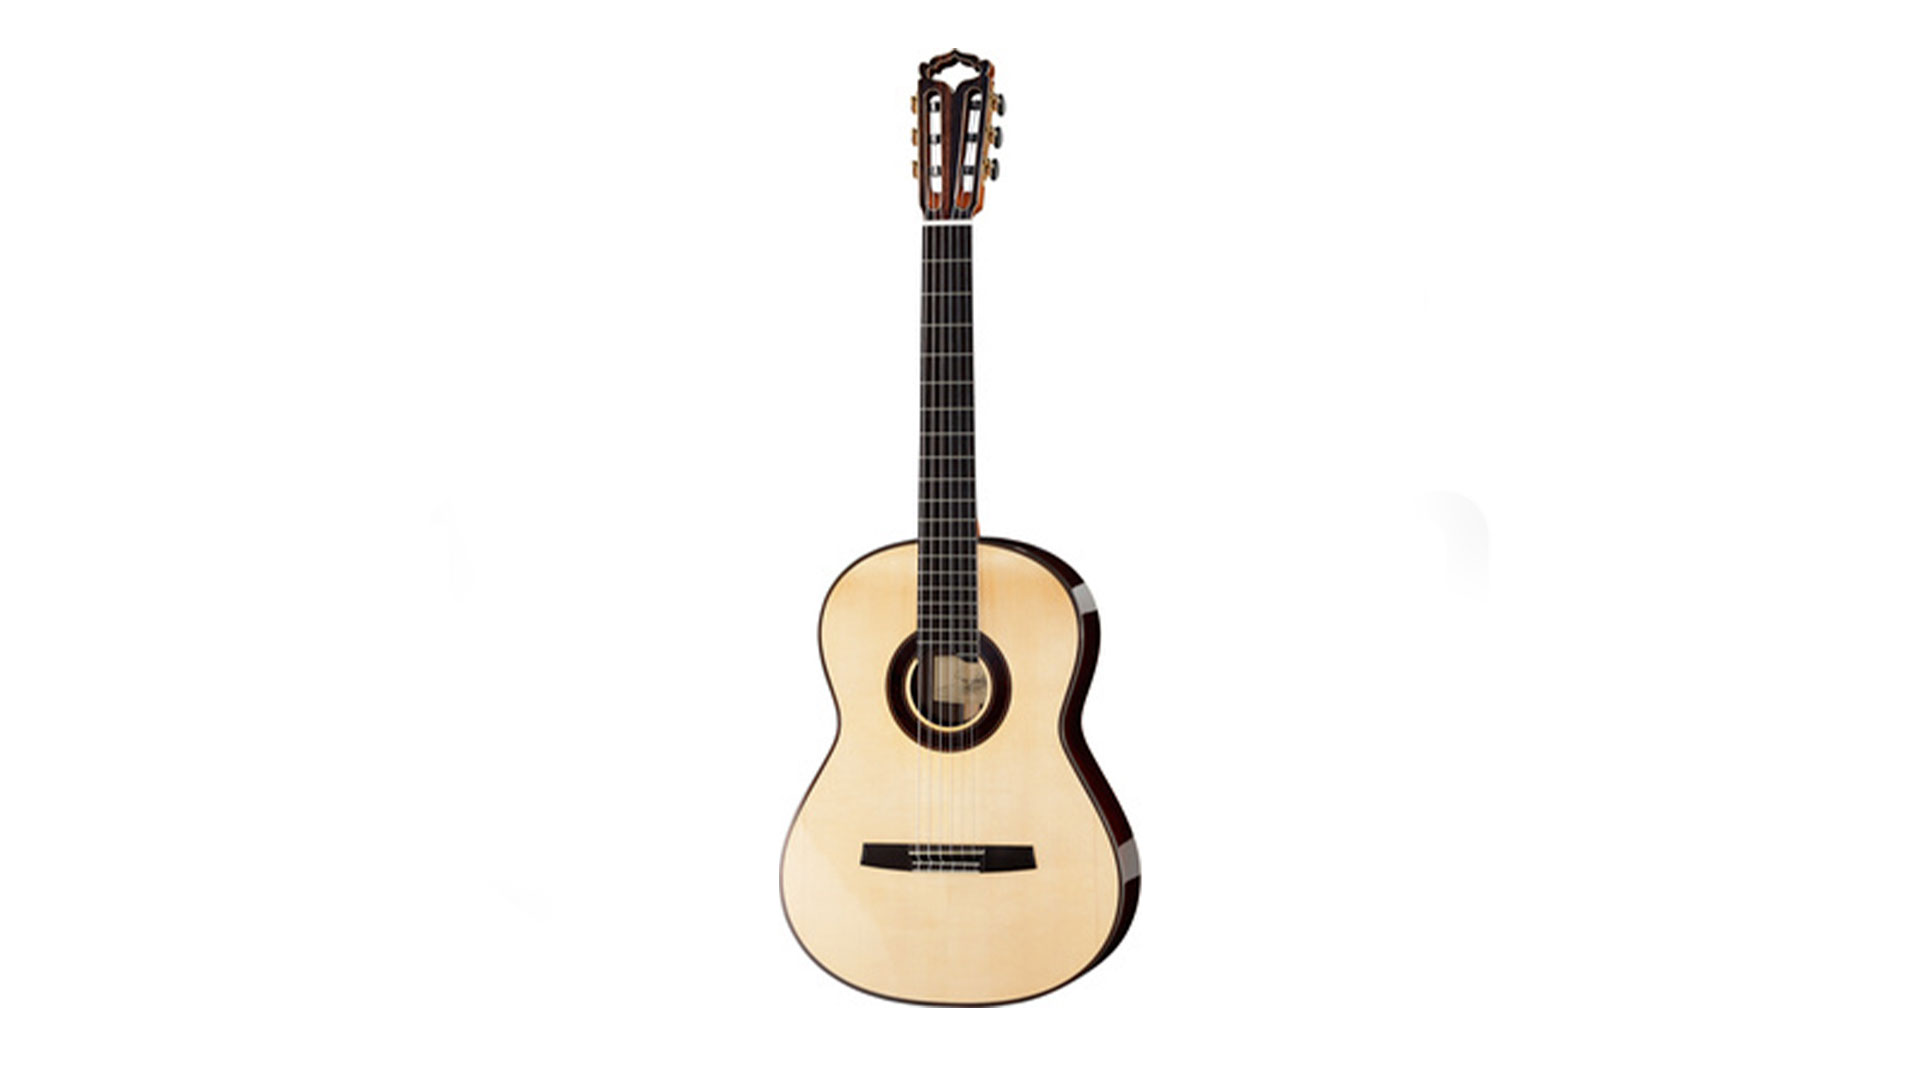 Standard Tension Yamaha CN 10 Classical Guitar-String Set Nylon Tips 